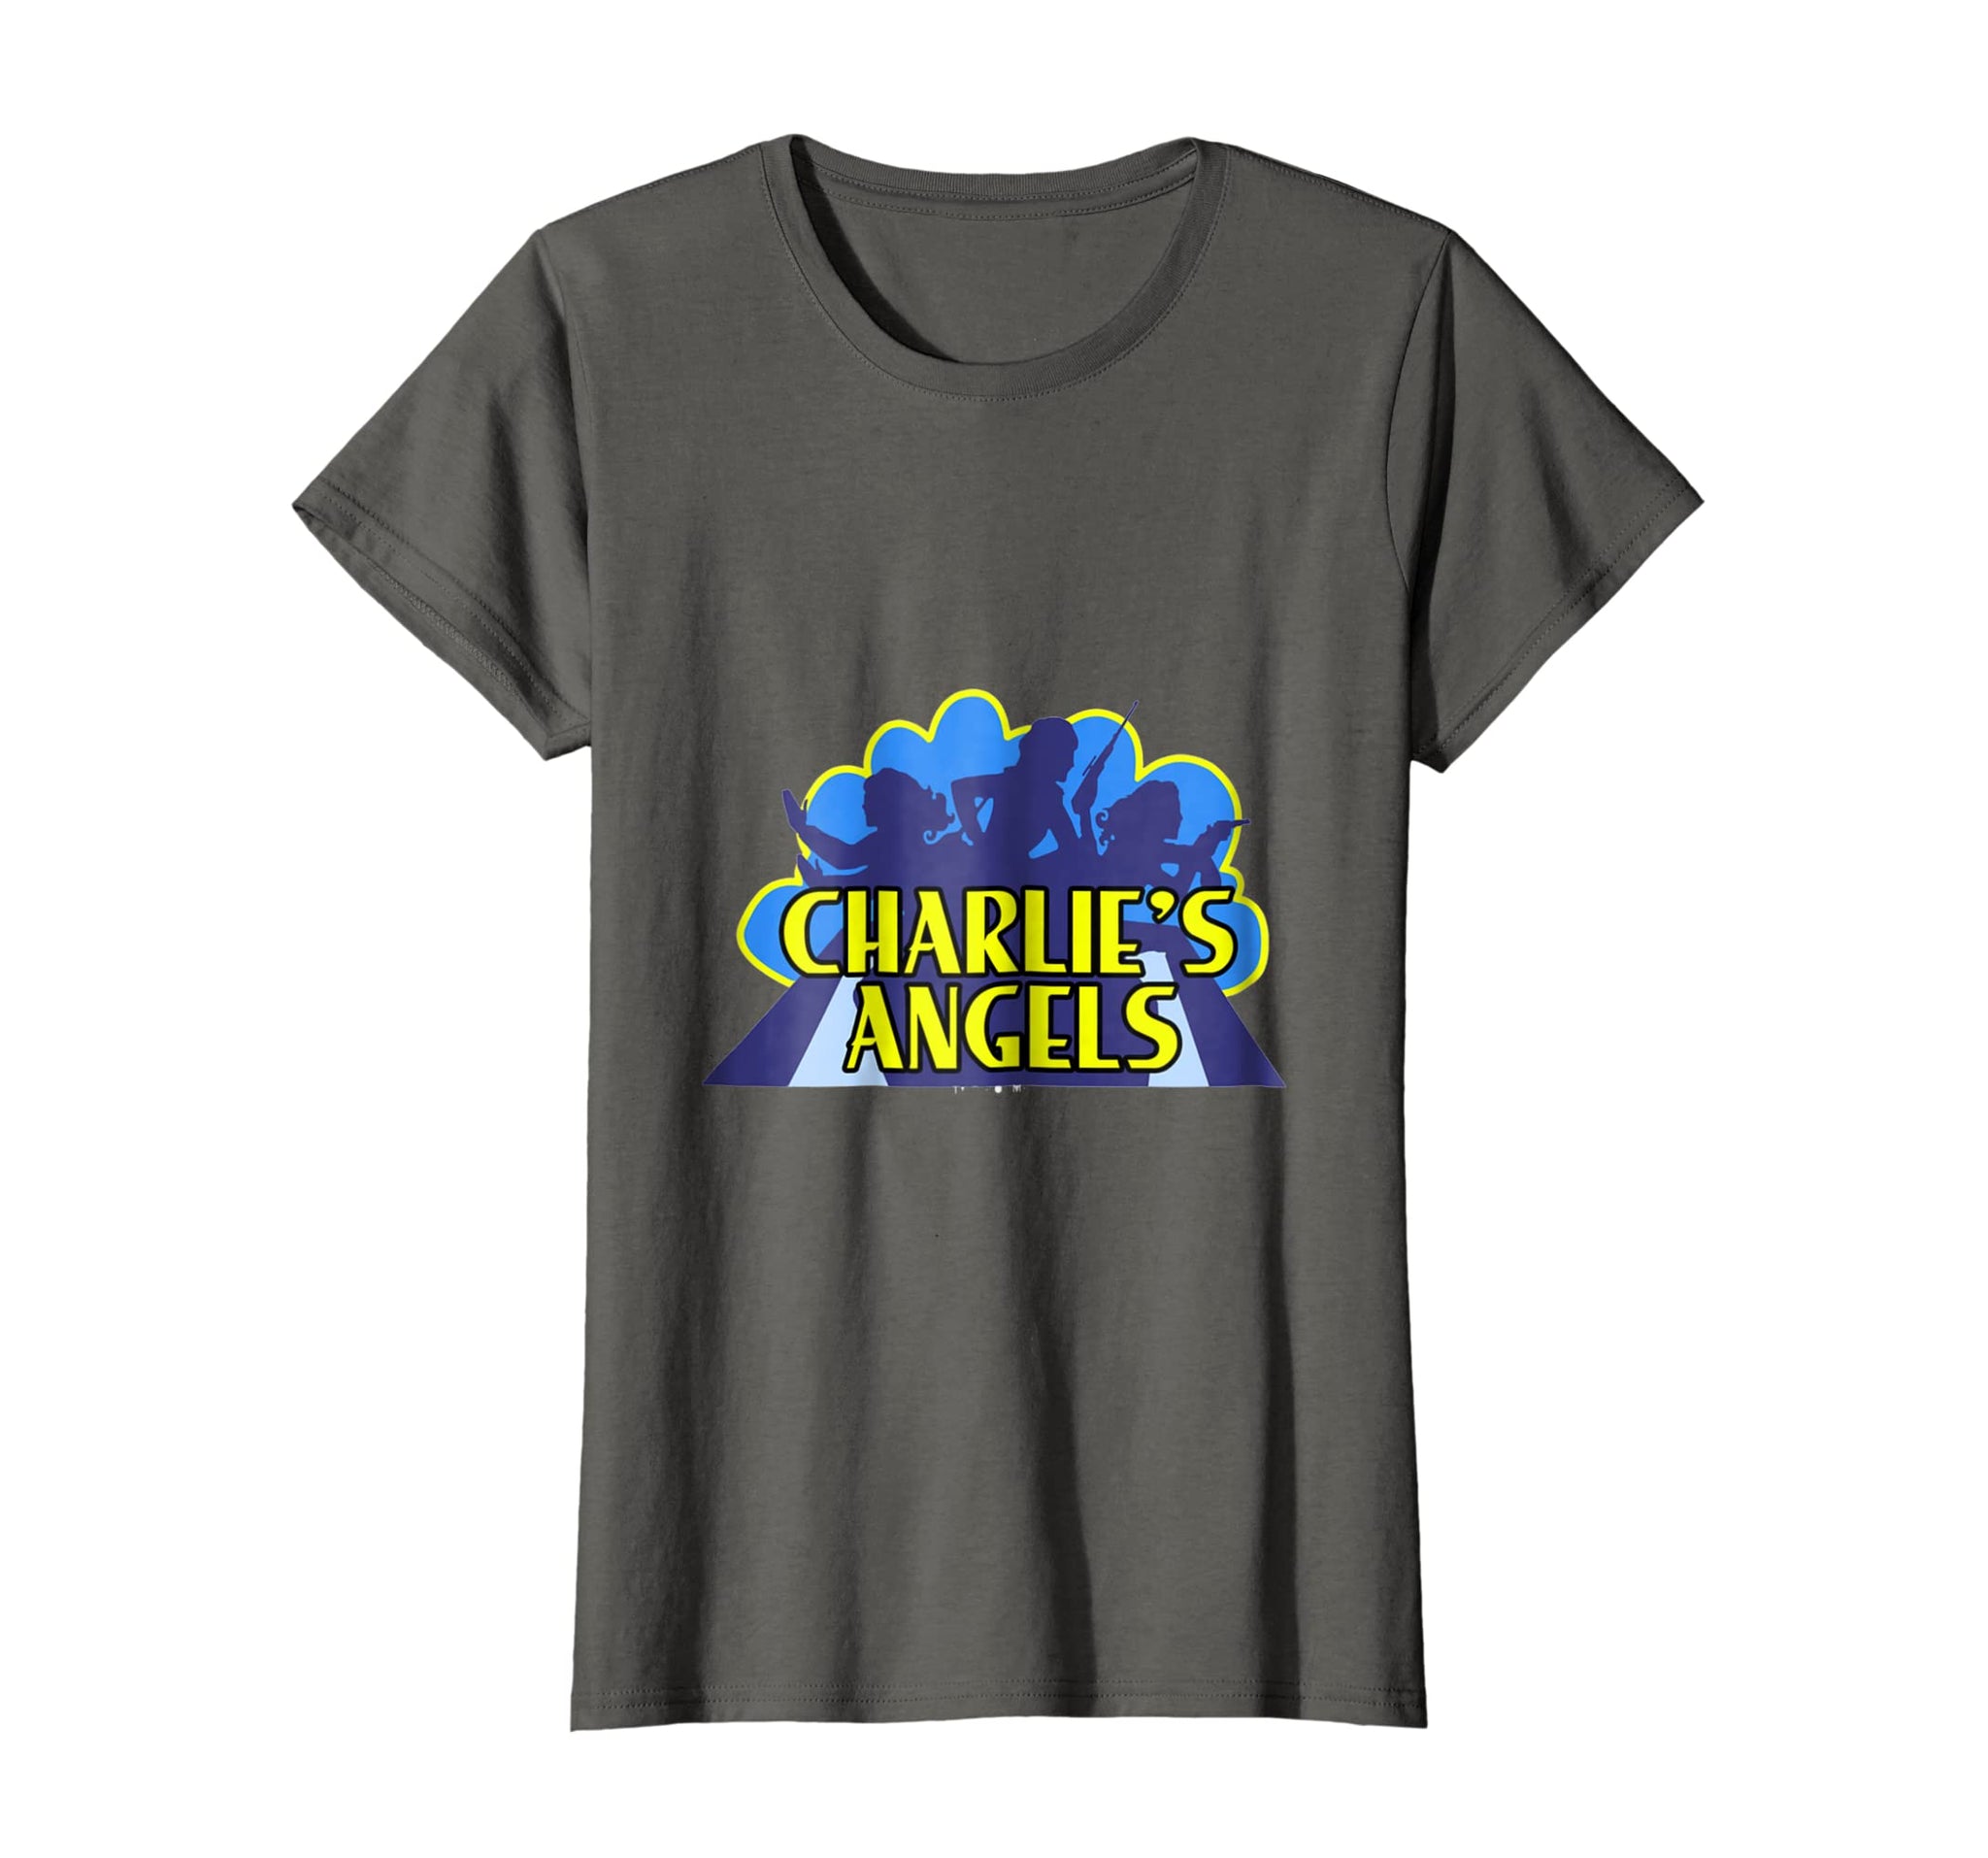 charlie's angels shirt